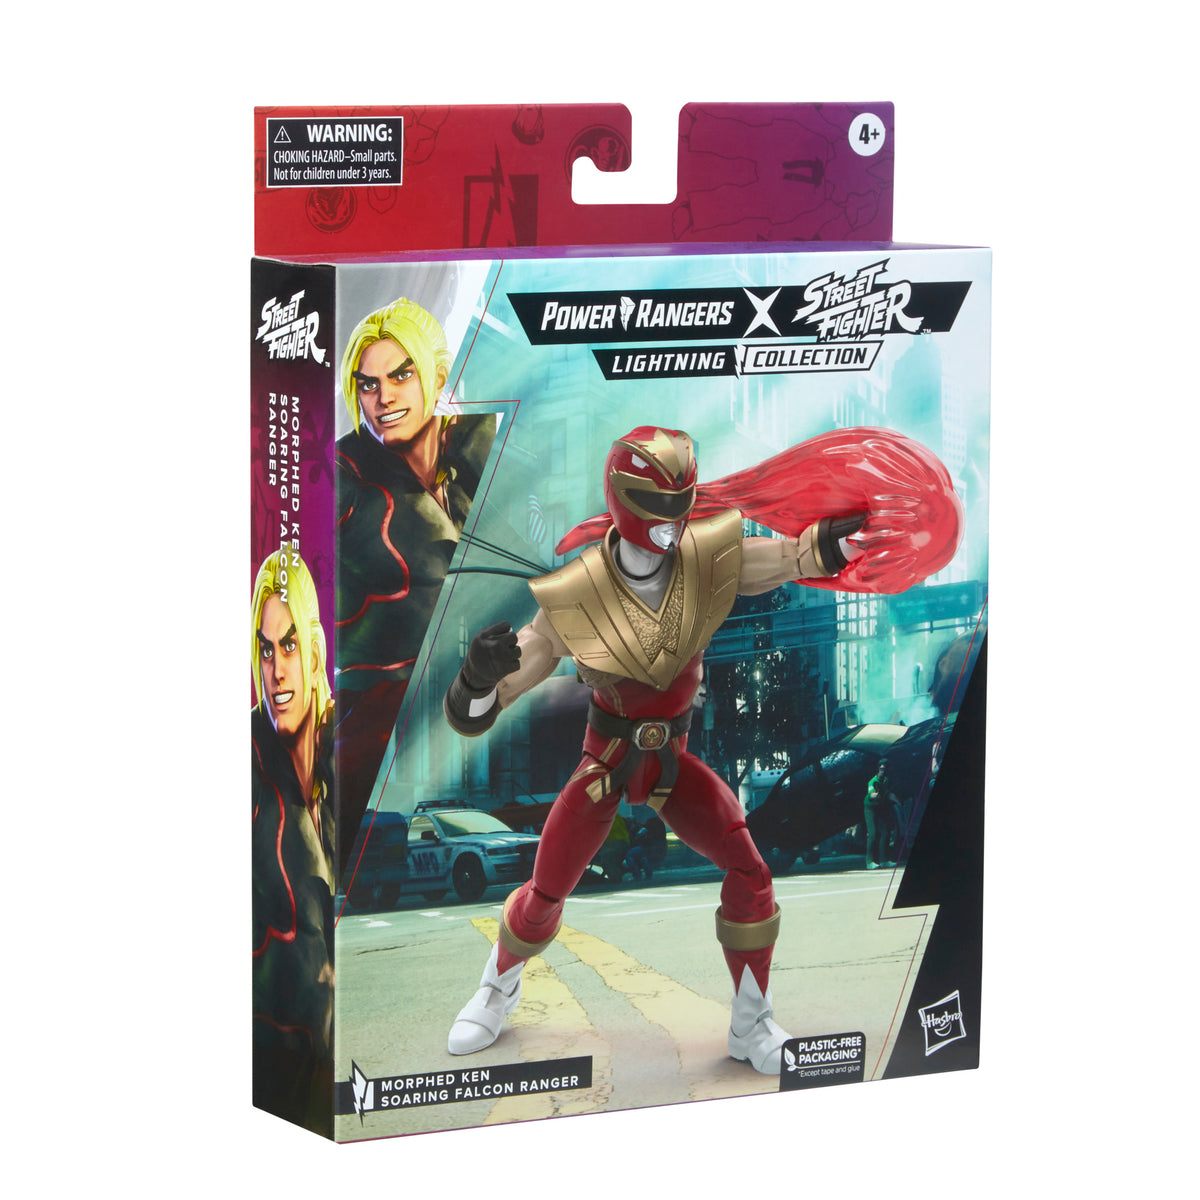 Power Rangers X Street Fighter Lightning Collection Morphed Ken Soarin –  Hasbro Pulse